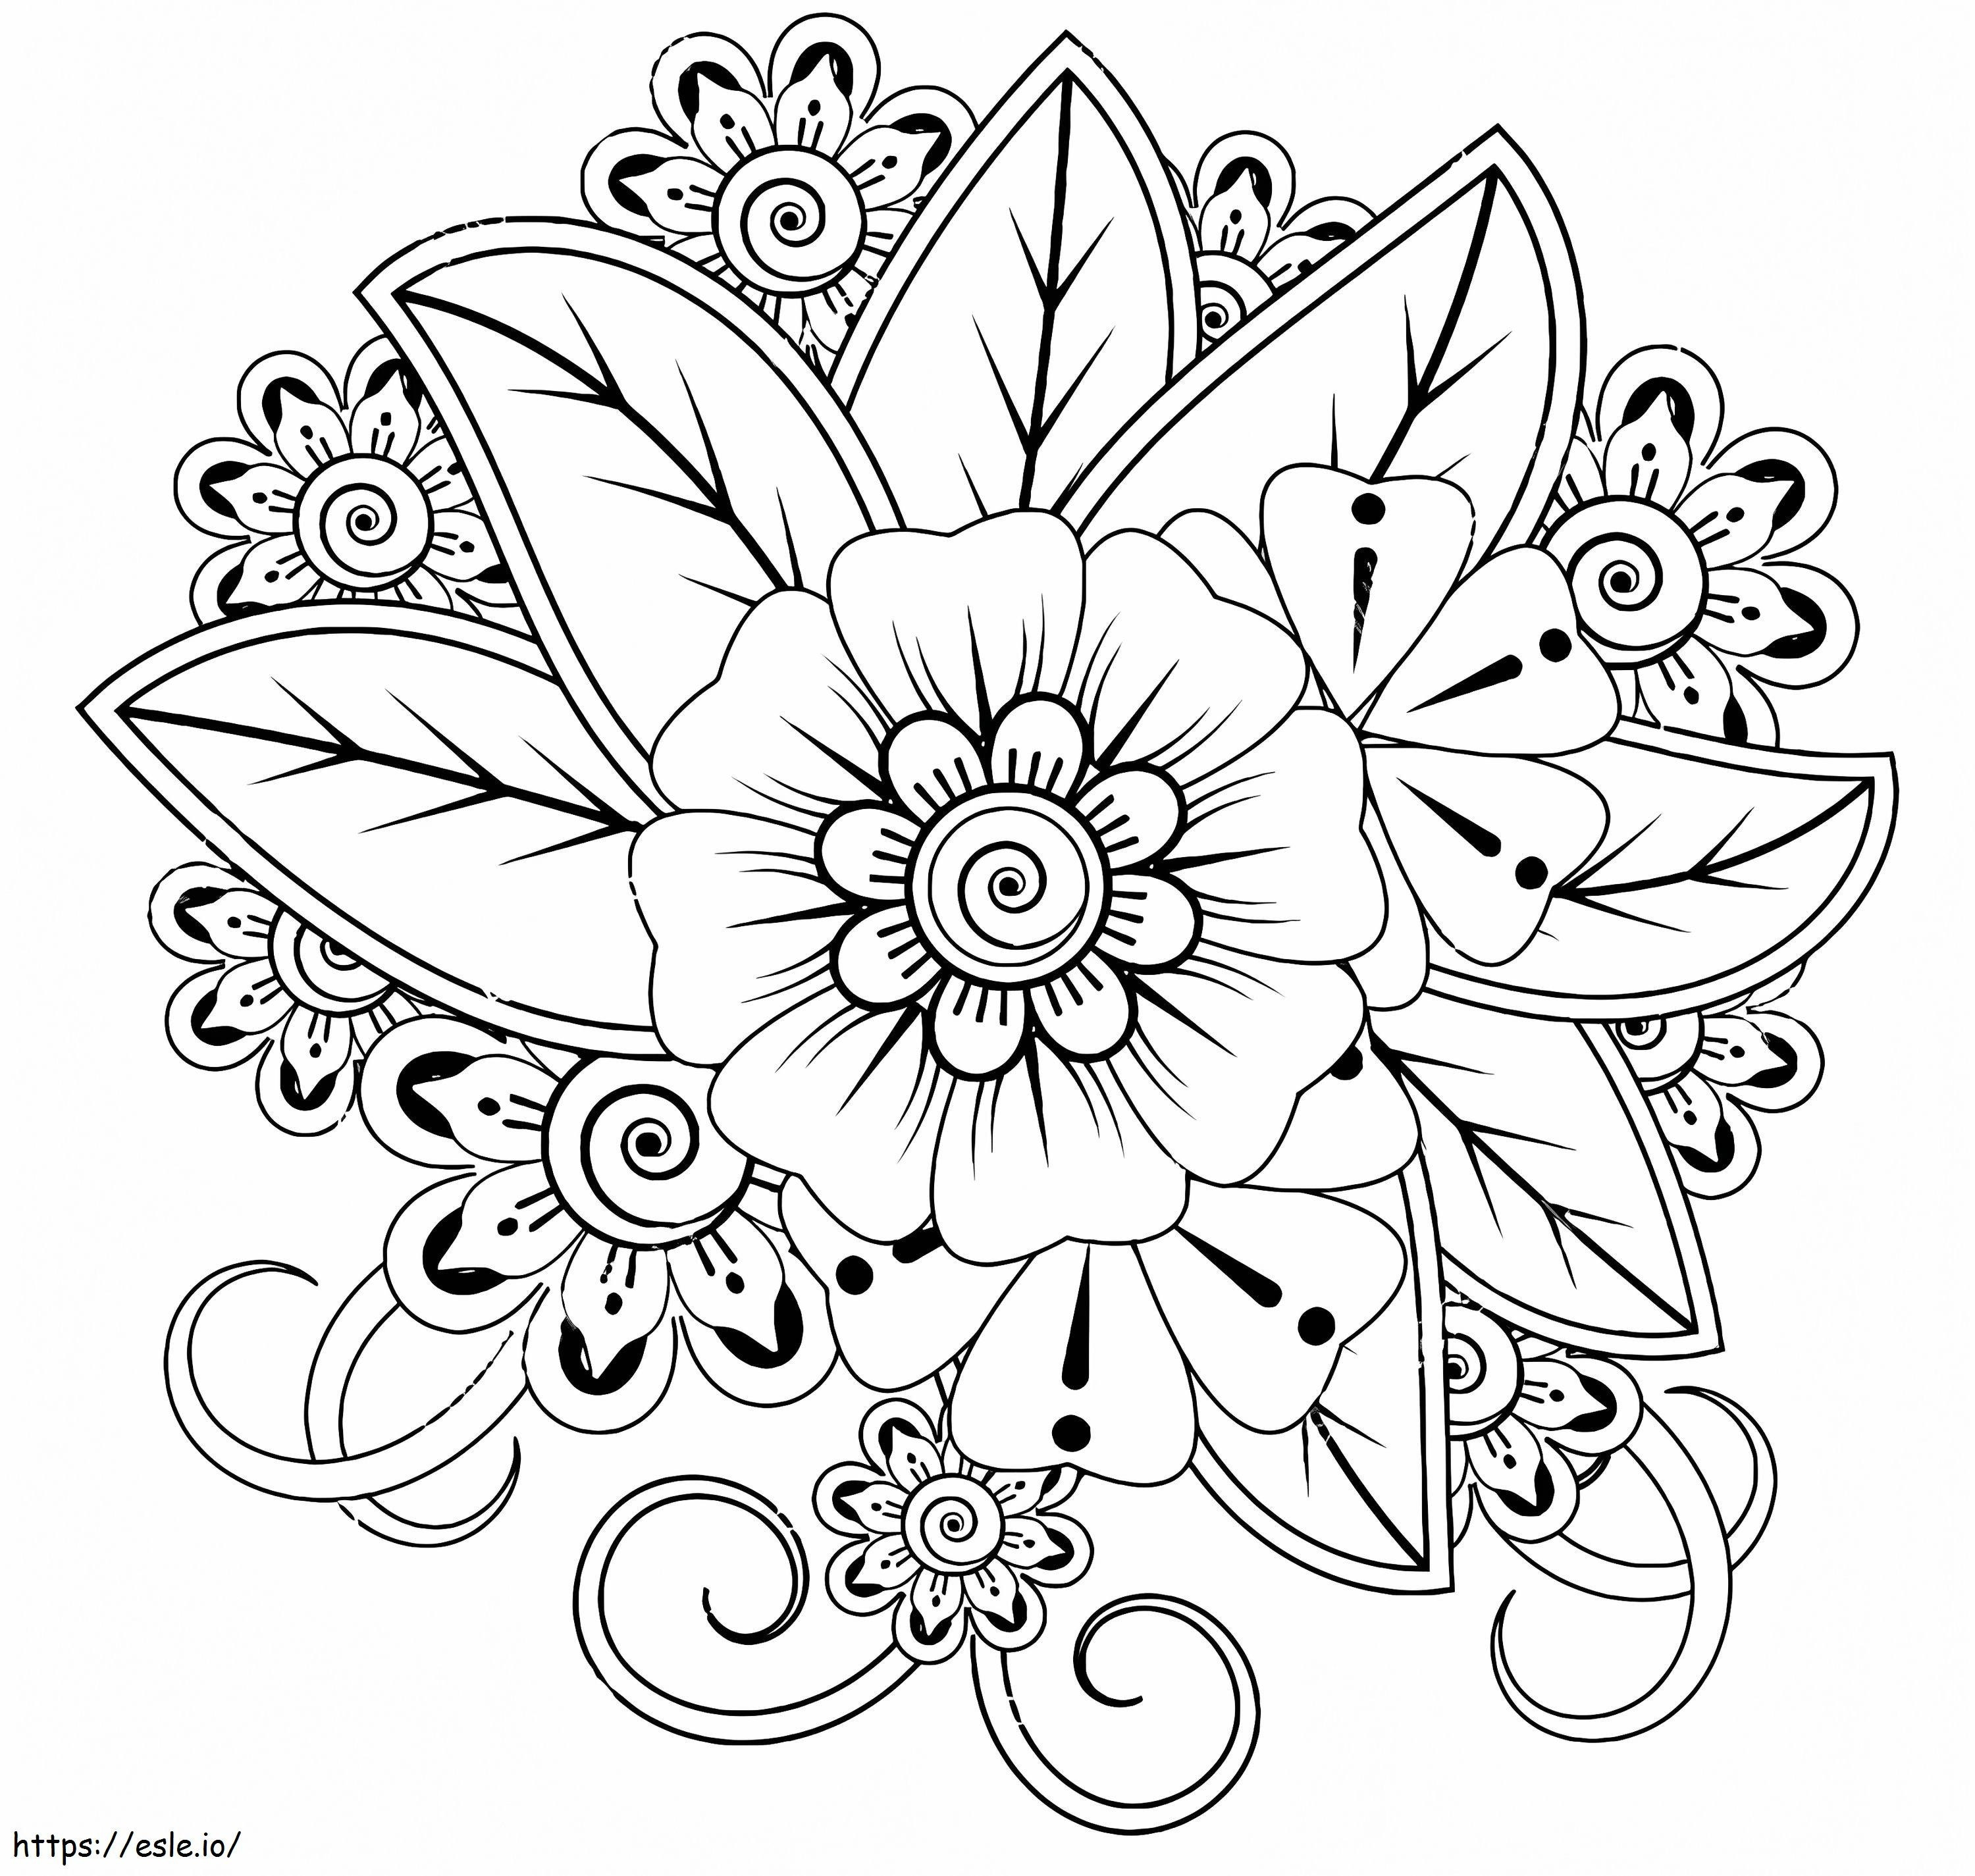 Mandala Flor para Imprimir Gratis para colorear